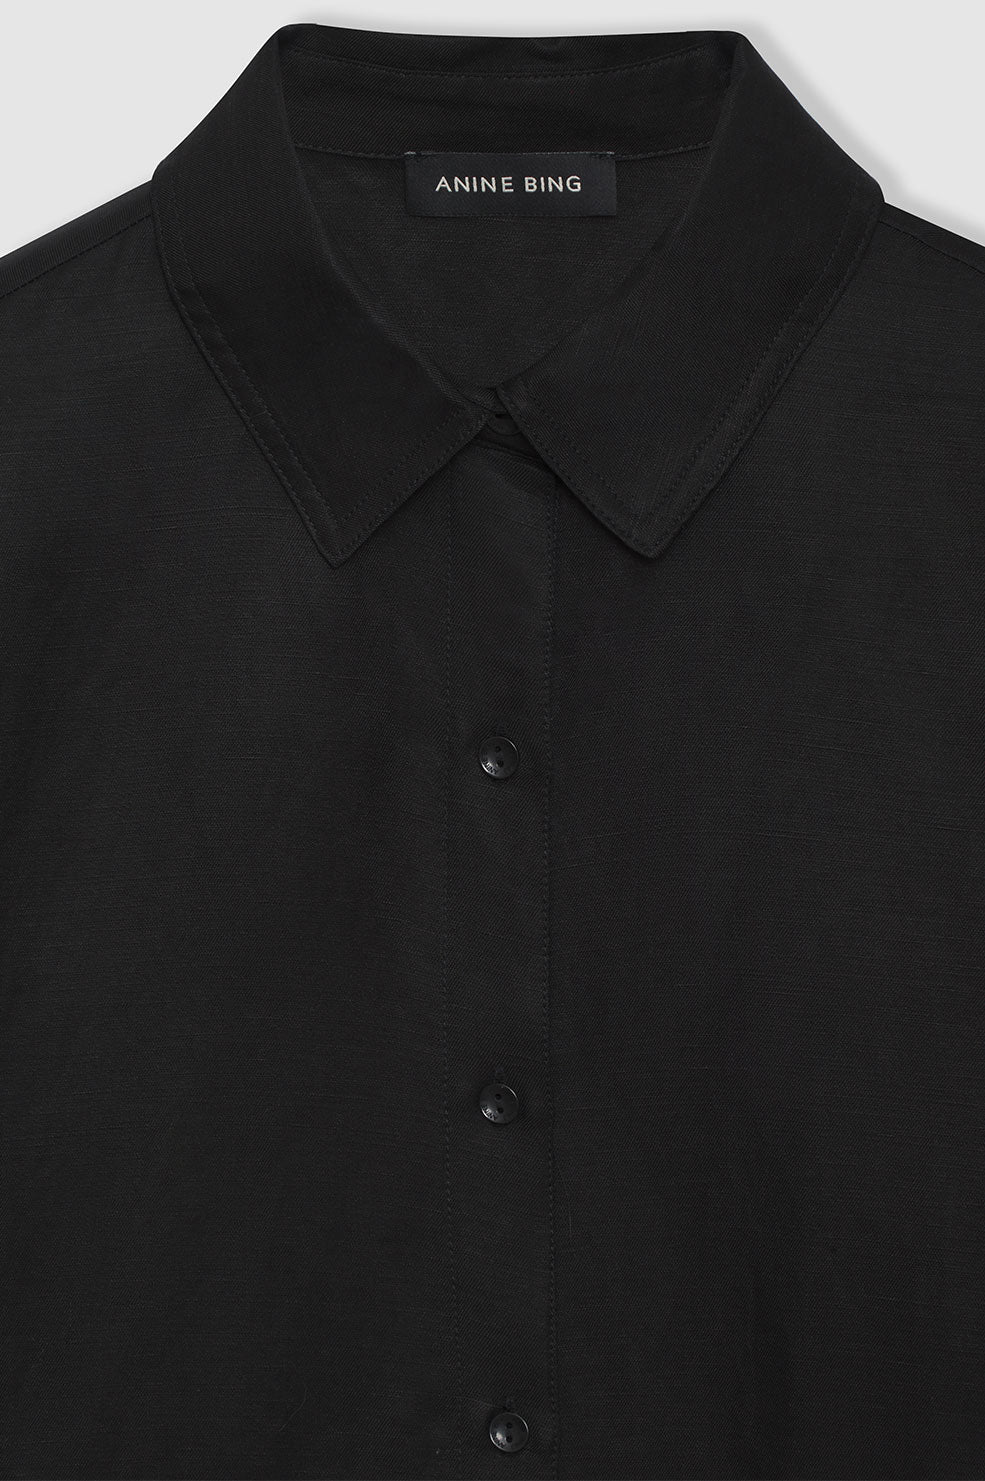 ANINE BING Bruni Shirt - Black Linen Blend - Detail View